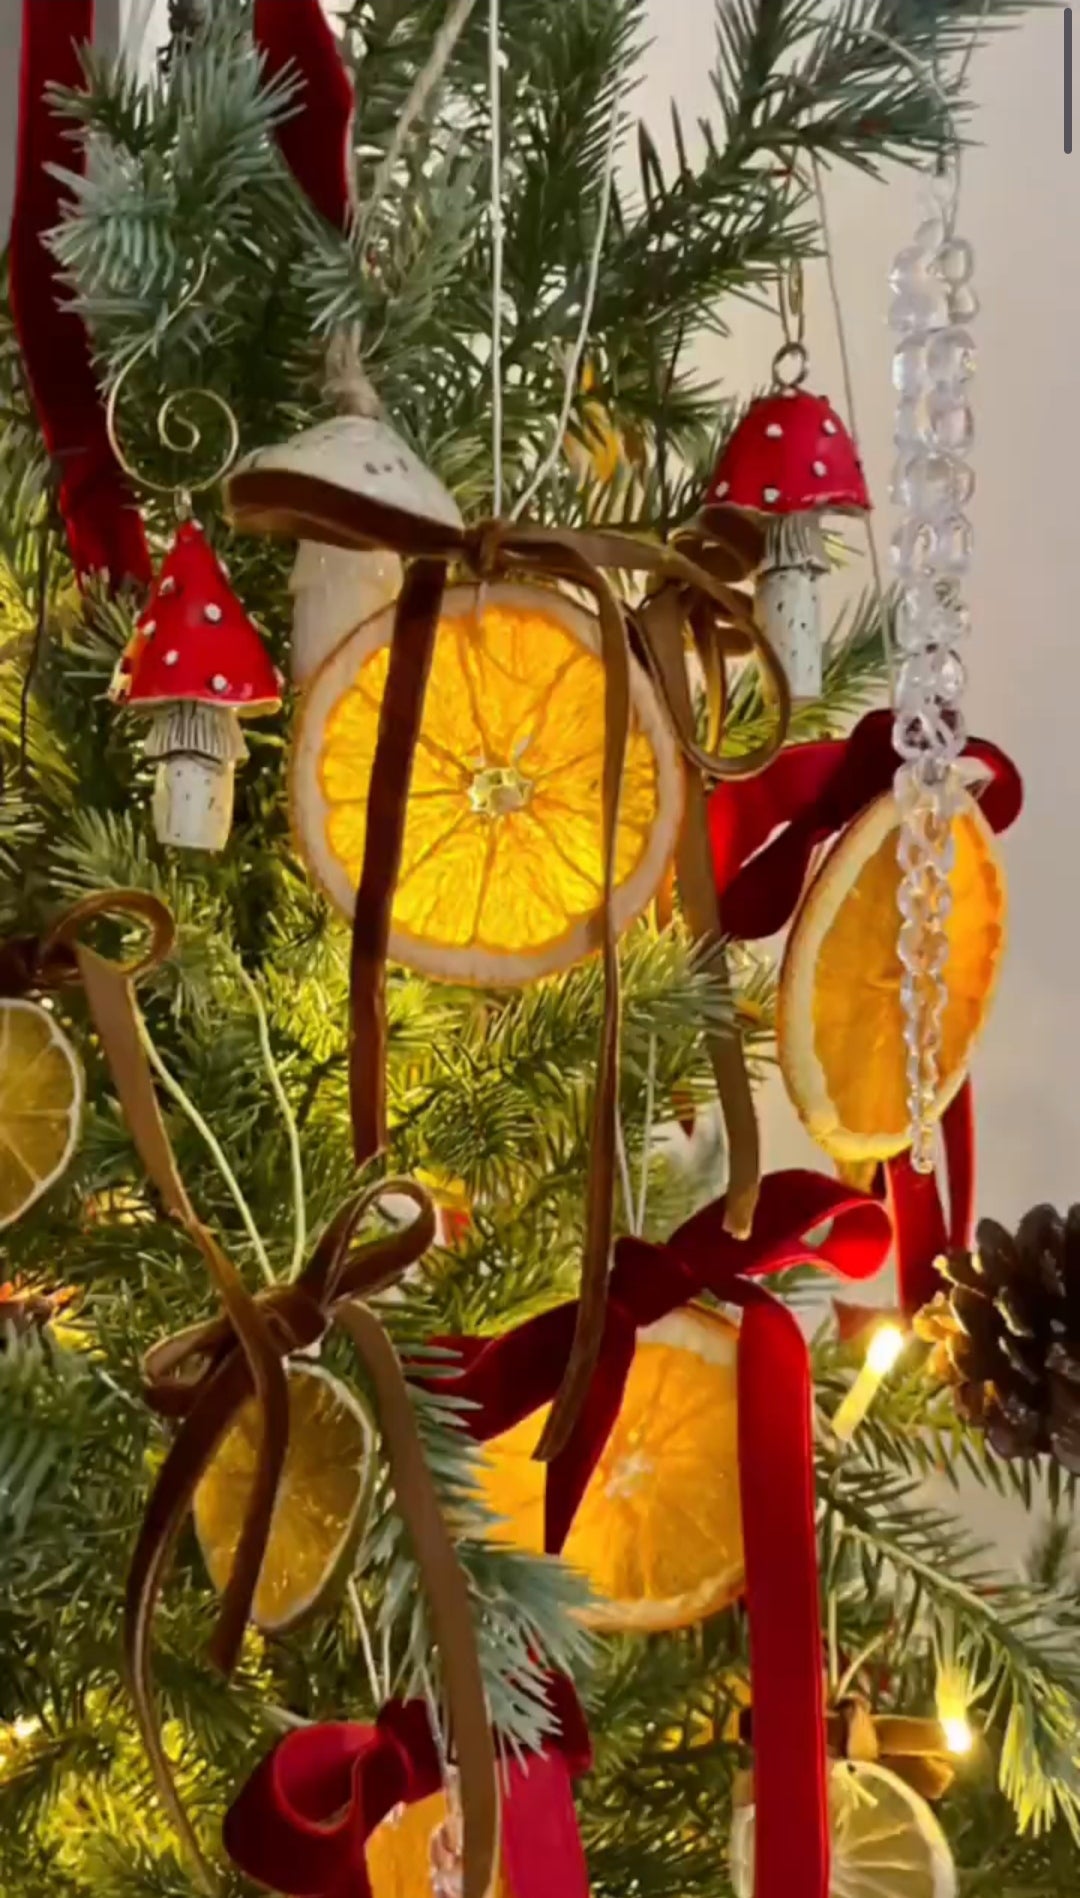 Dried orange ornaments